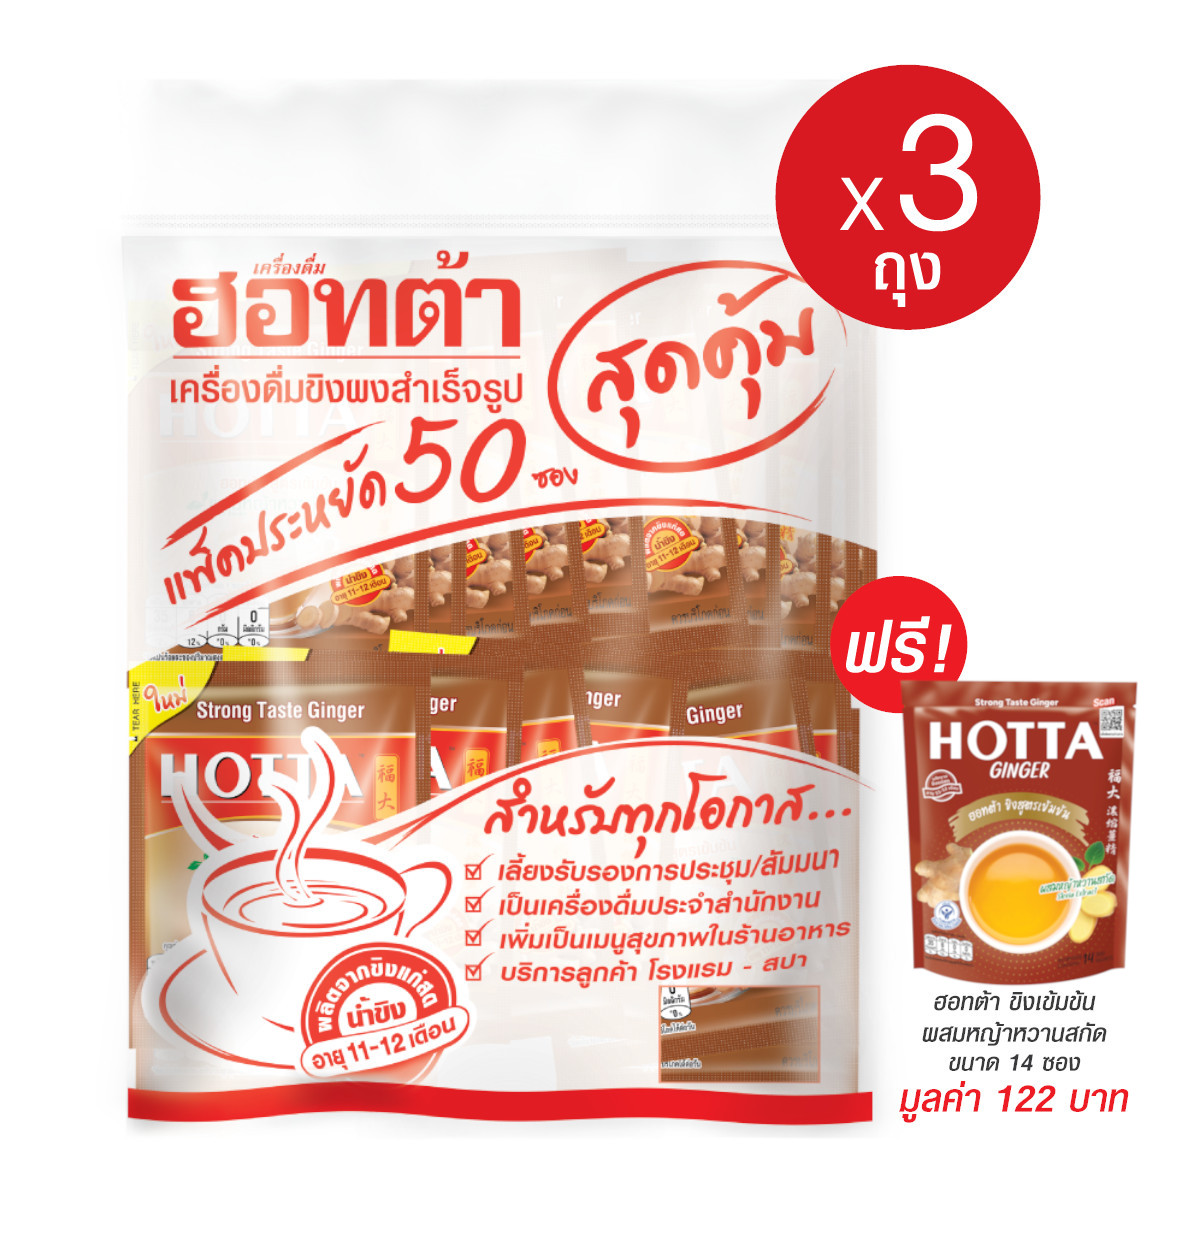 HOTTA Instant Ginger with Stevia Extract Strong Taste Formula 9g., 50 Sachets, 3 Packs (Free 14 Sticks)